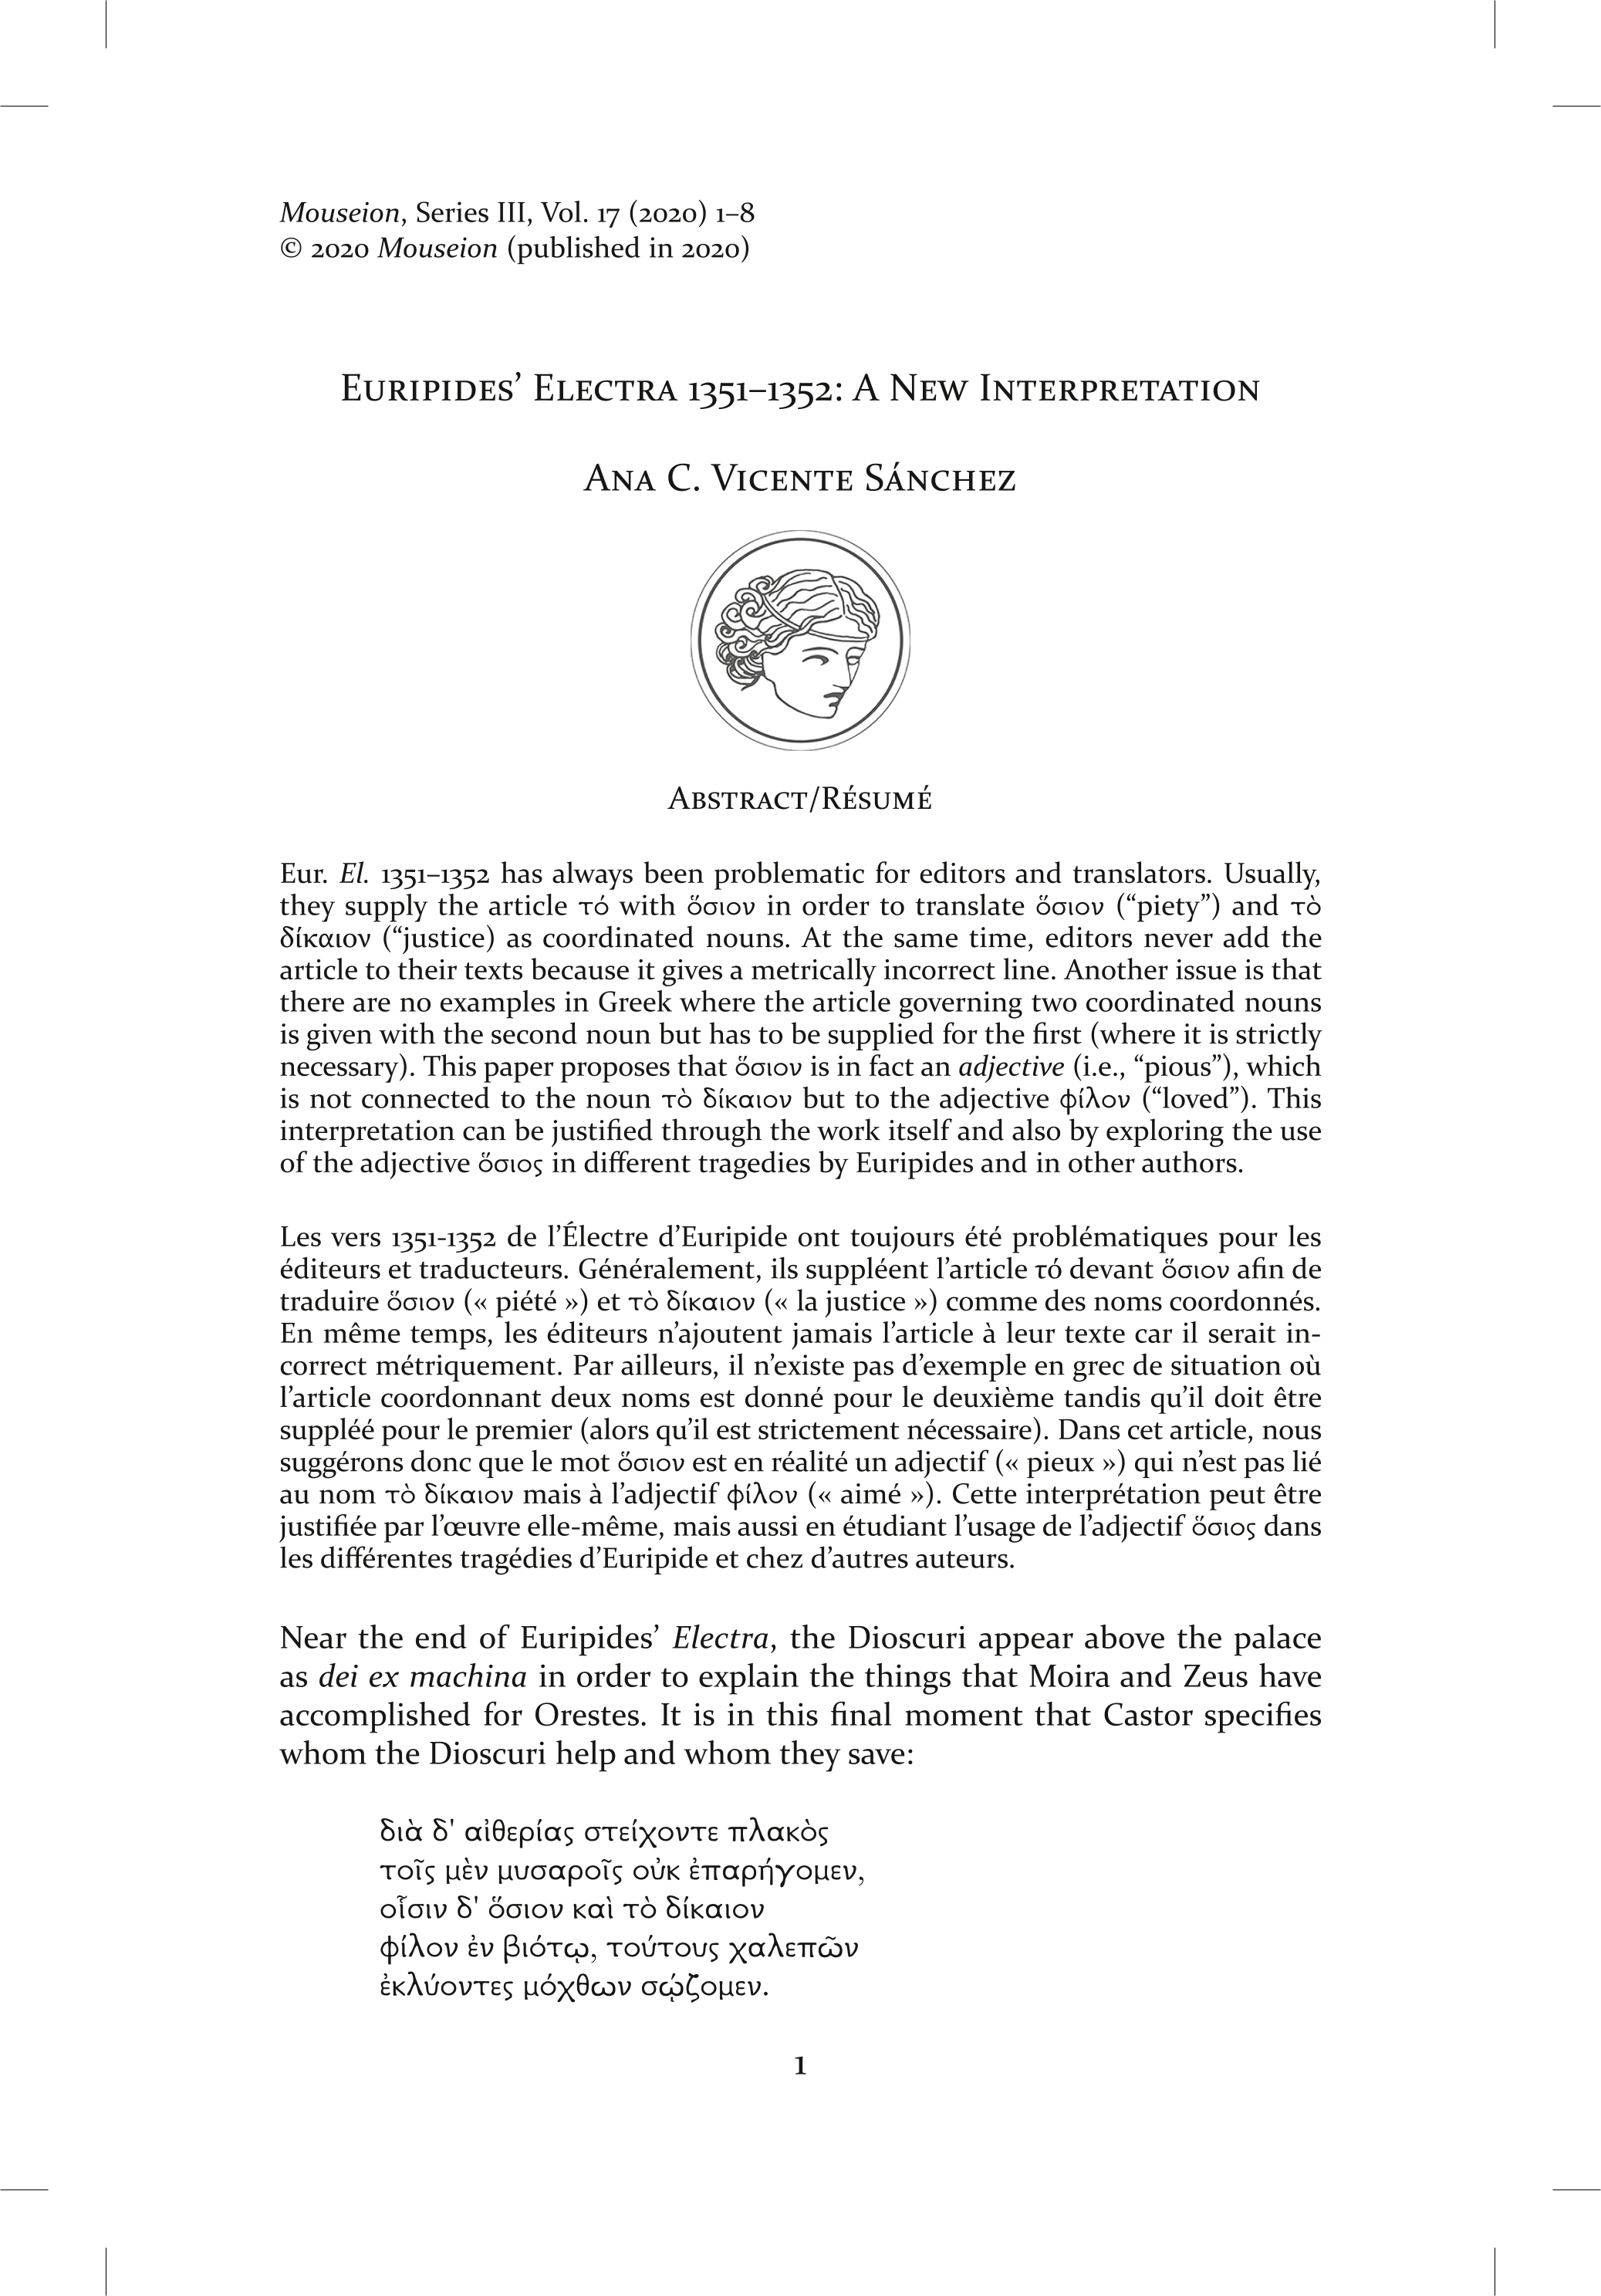 Euripides’ Electra 1351-1352: A New Interpretation